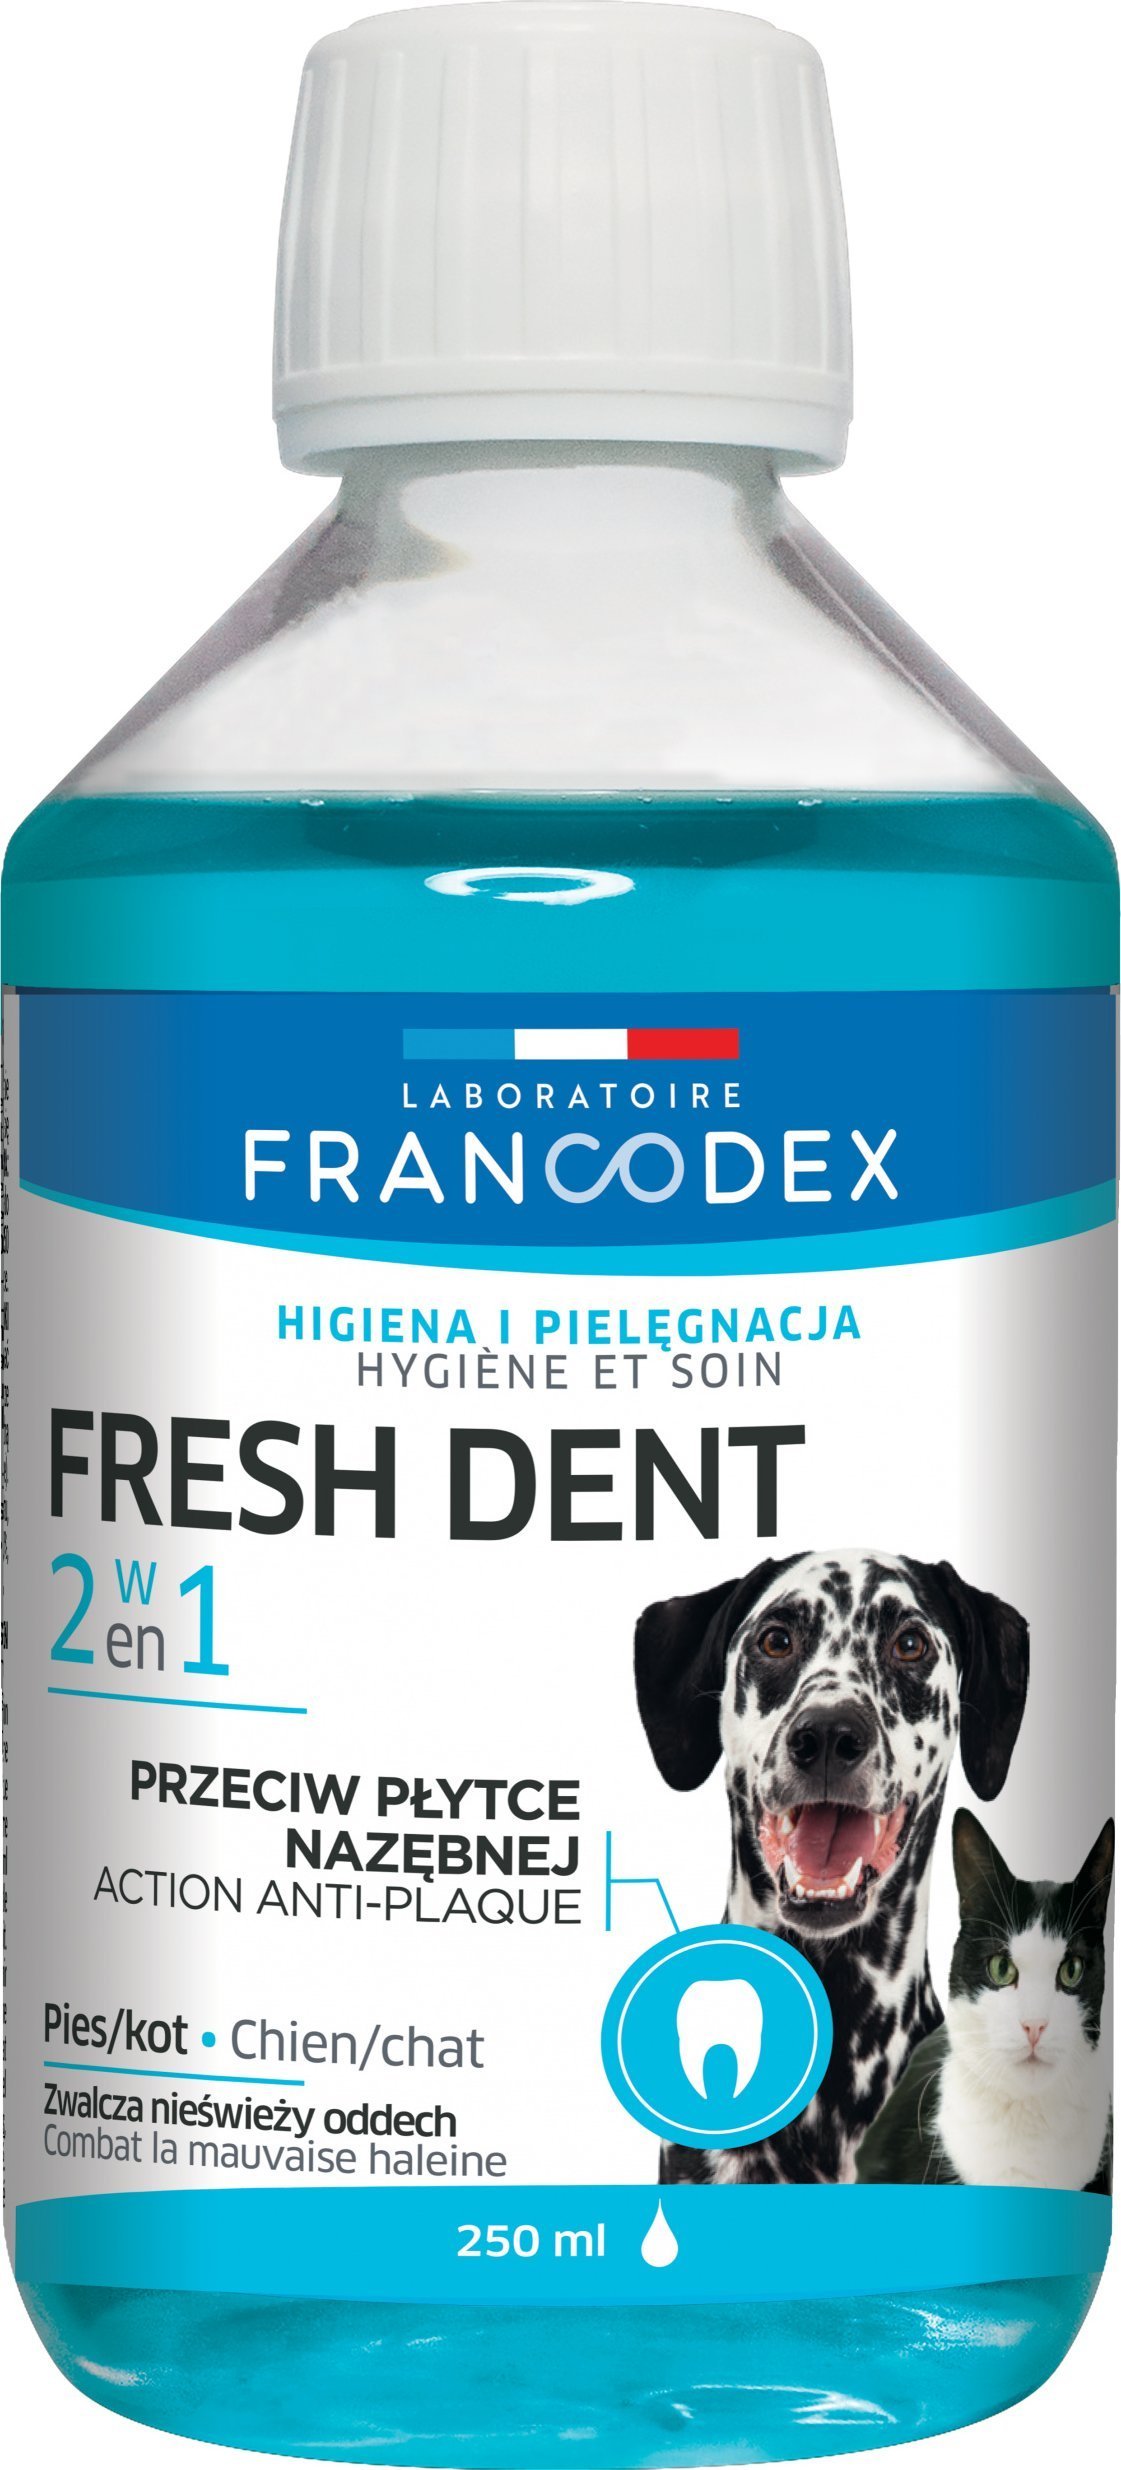 Solutie pentru igiena orala Francodex Fresh Dent, Extract de rodie, Potrivita pentru caini si pisici, 250 ml